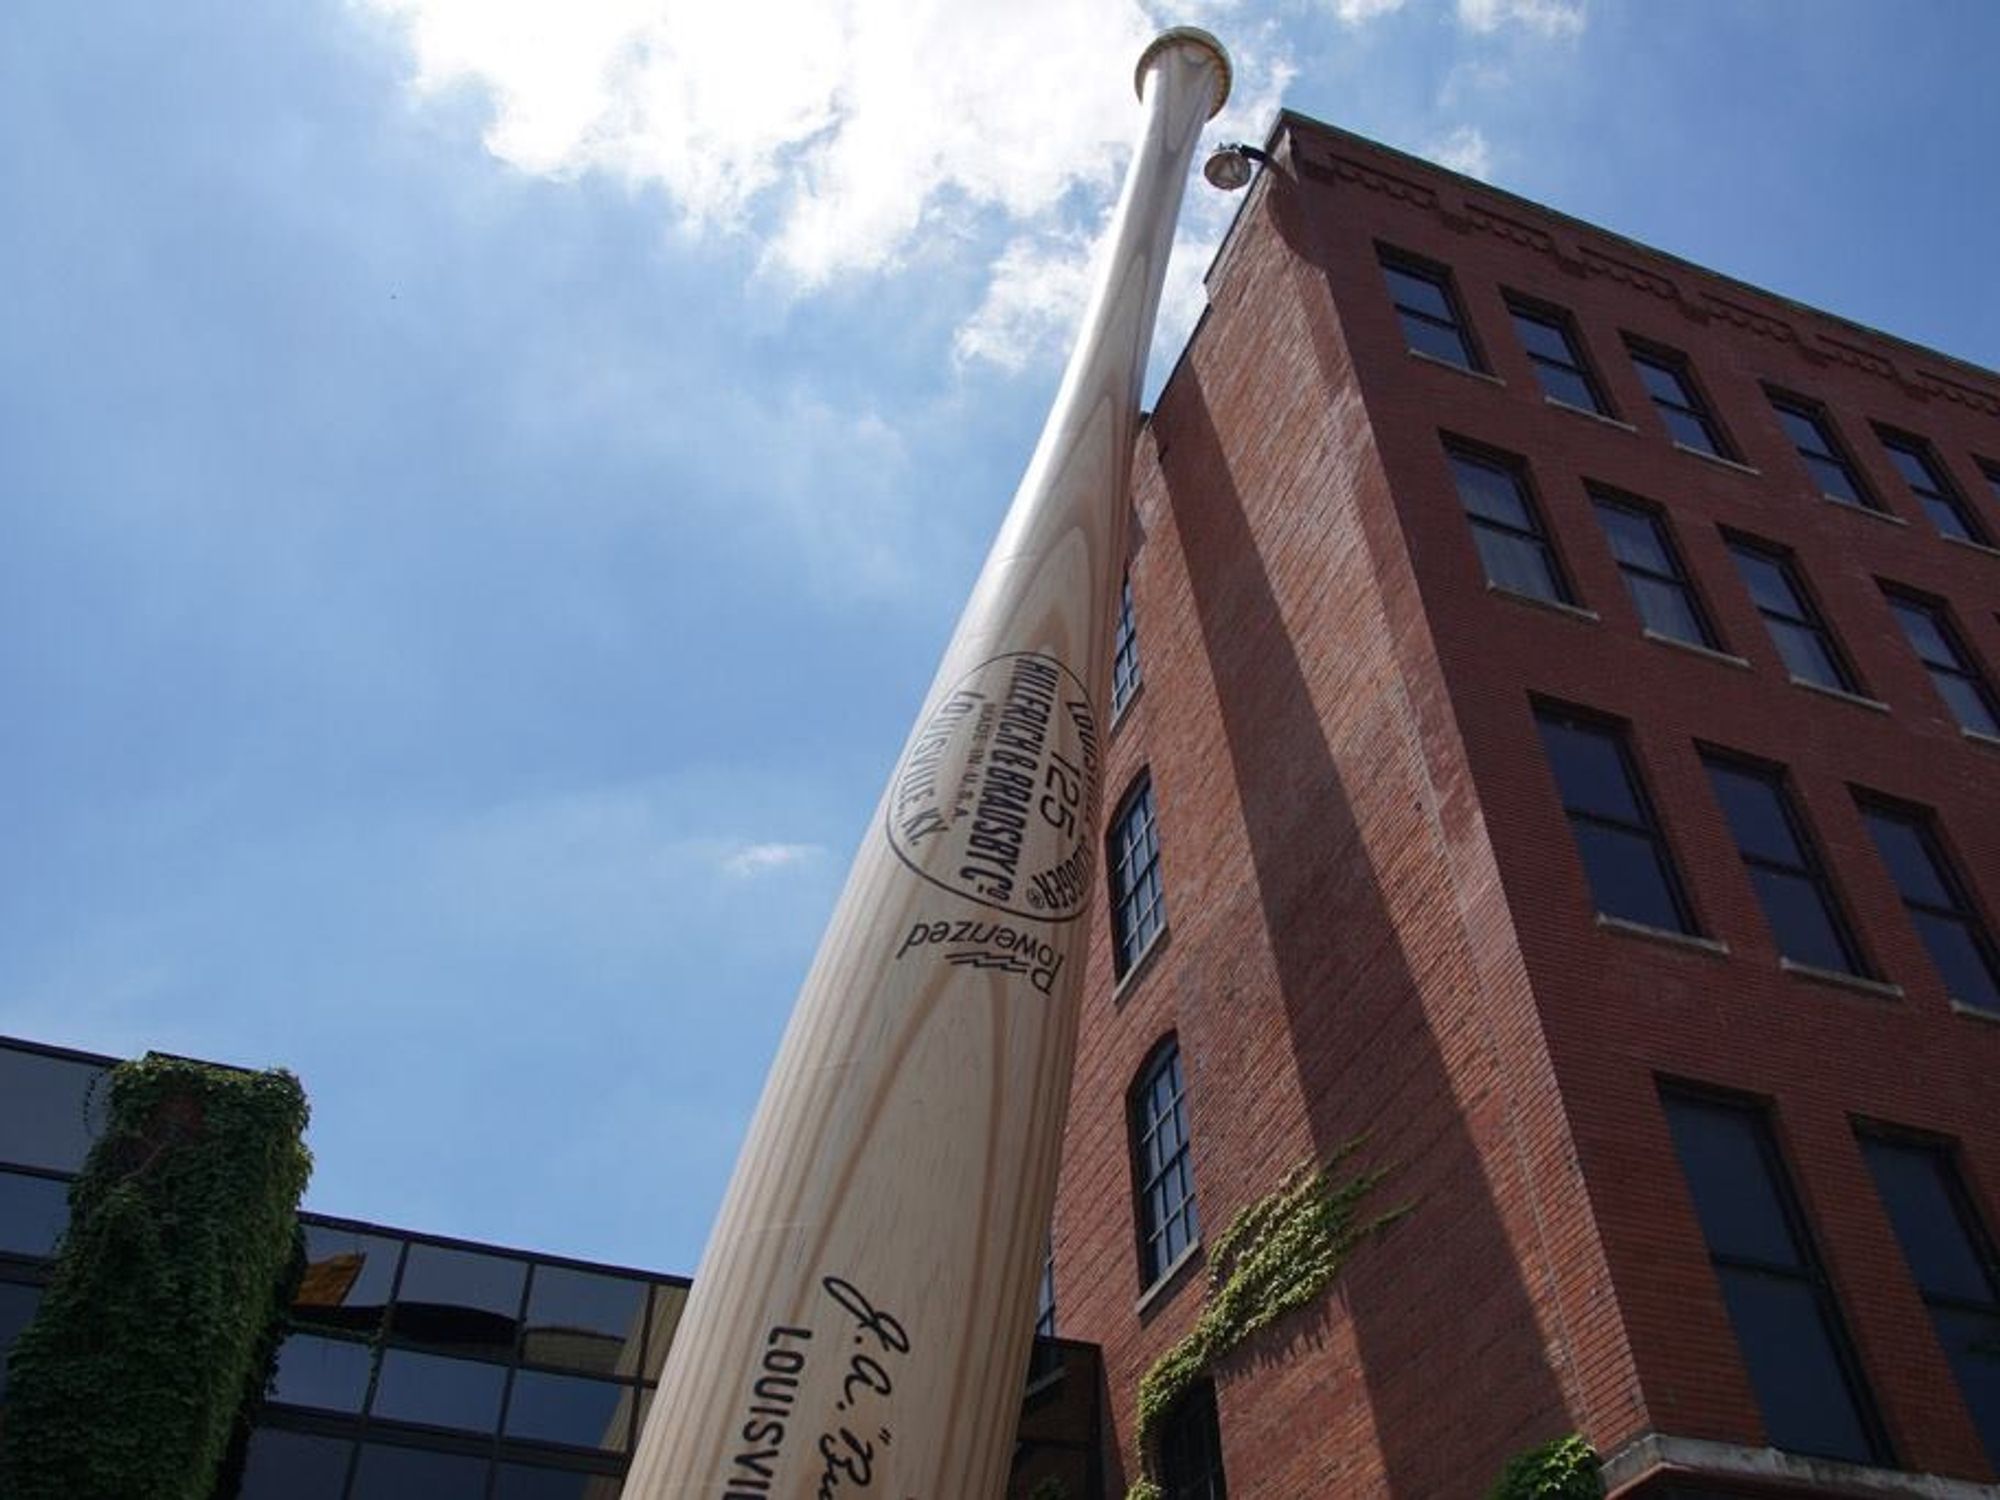 Babe Ruth Baseball Bat at Louisville Slugger Museum in Louisville, Kentucky